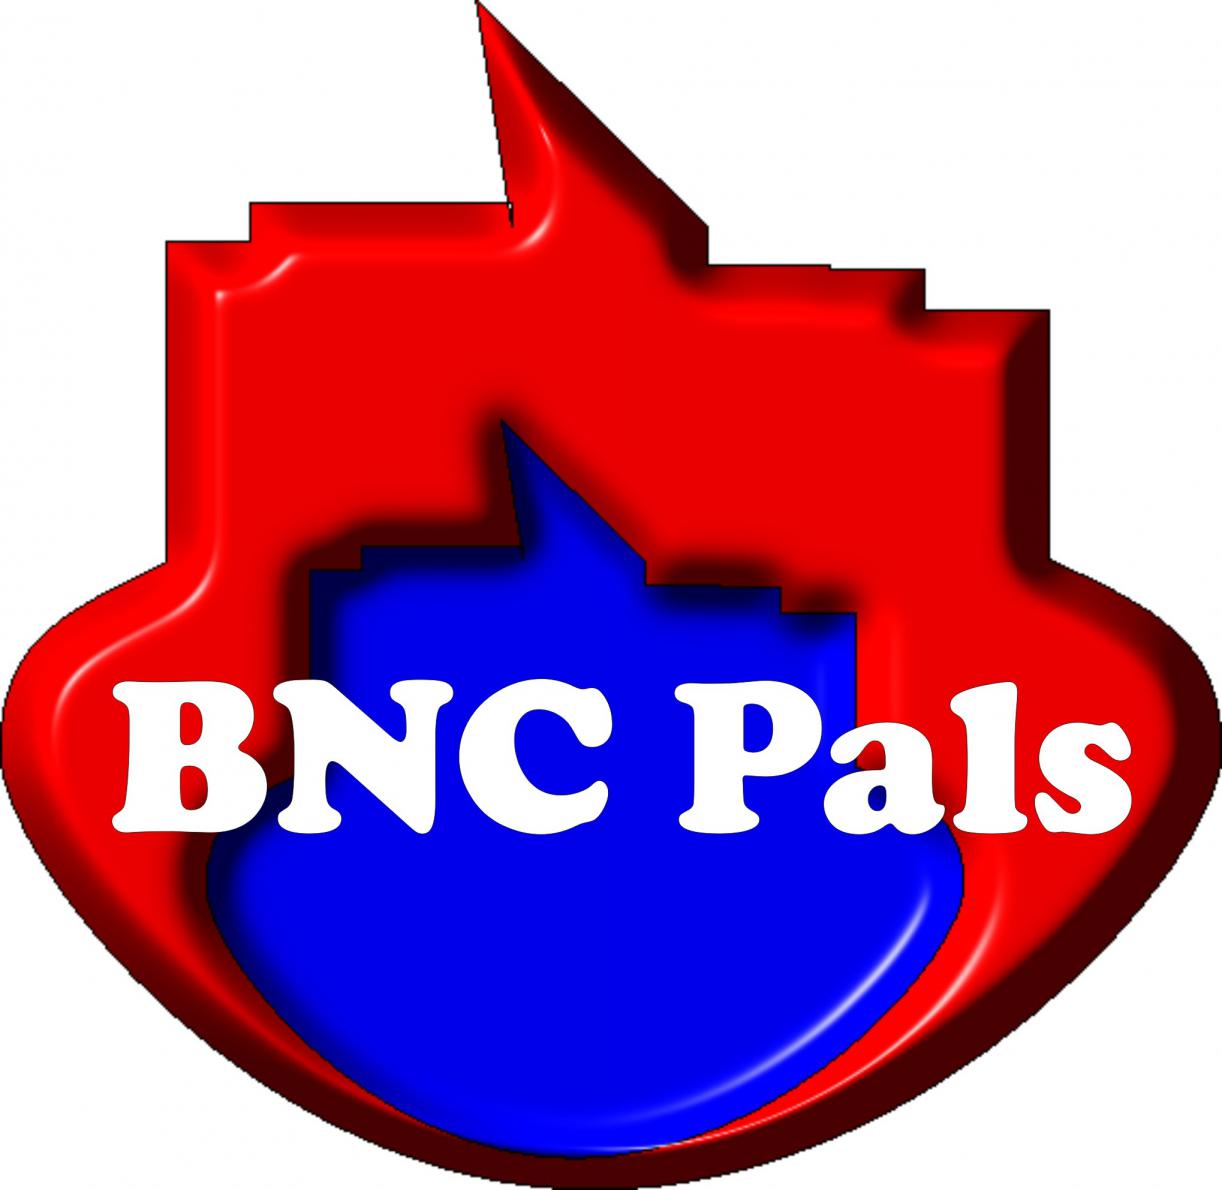 BNCPals